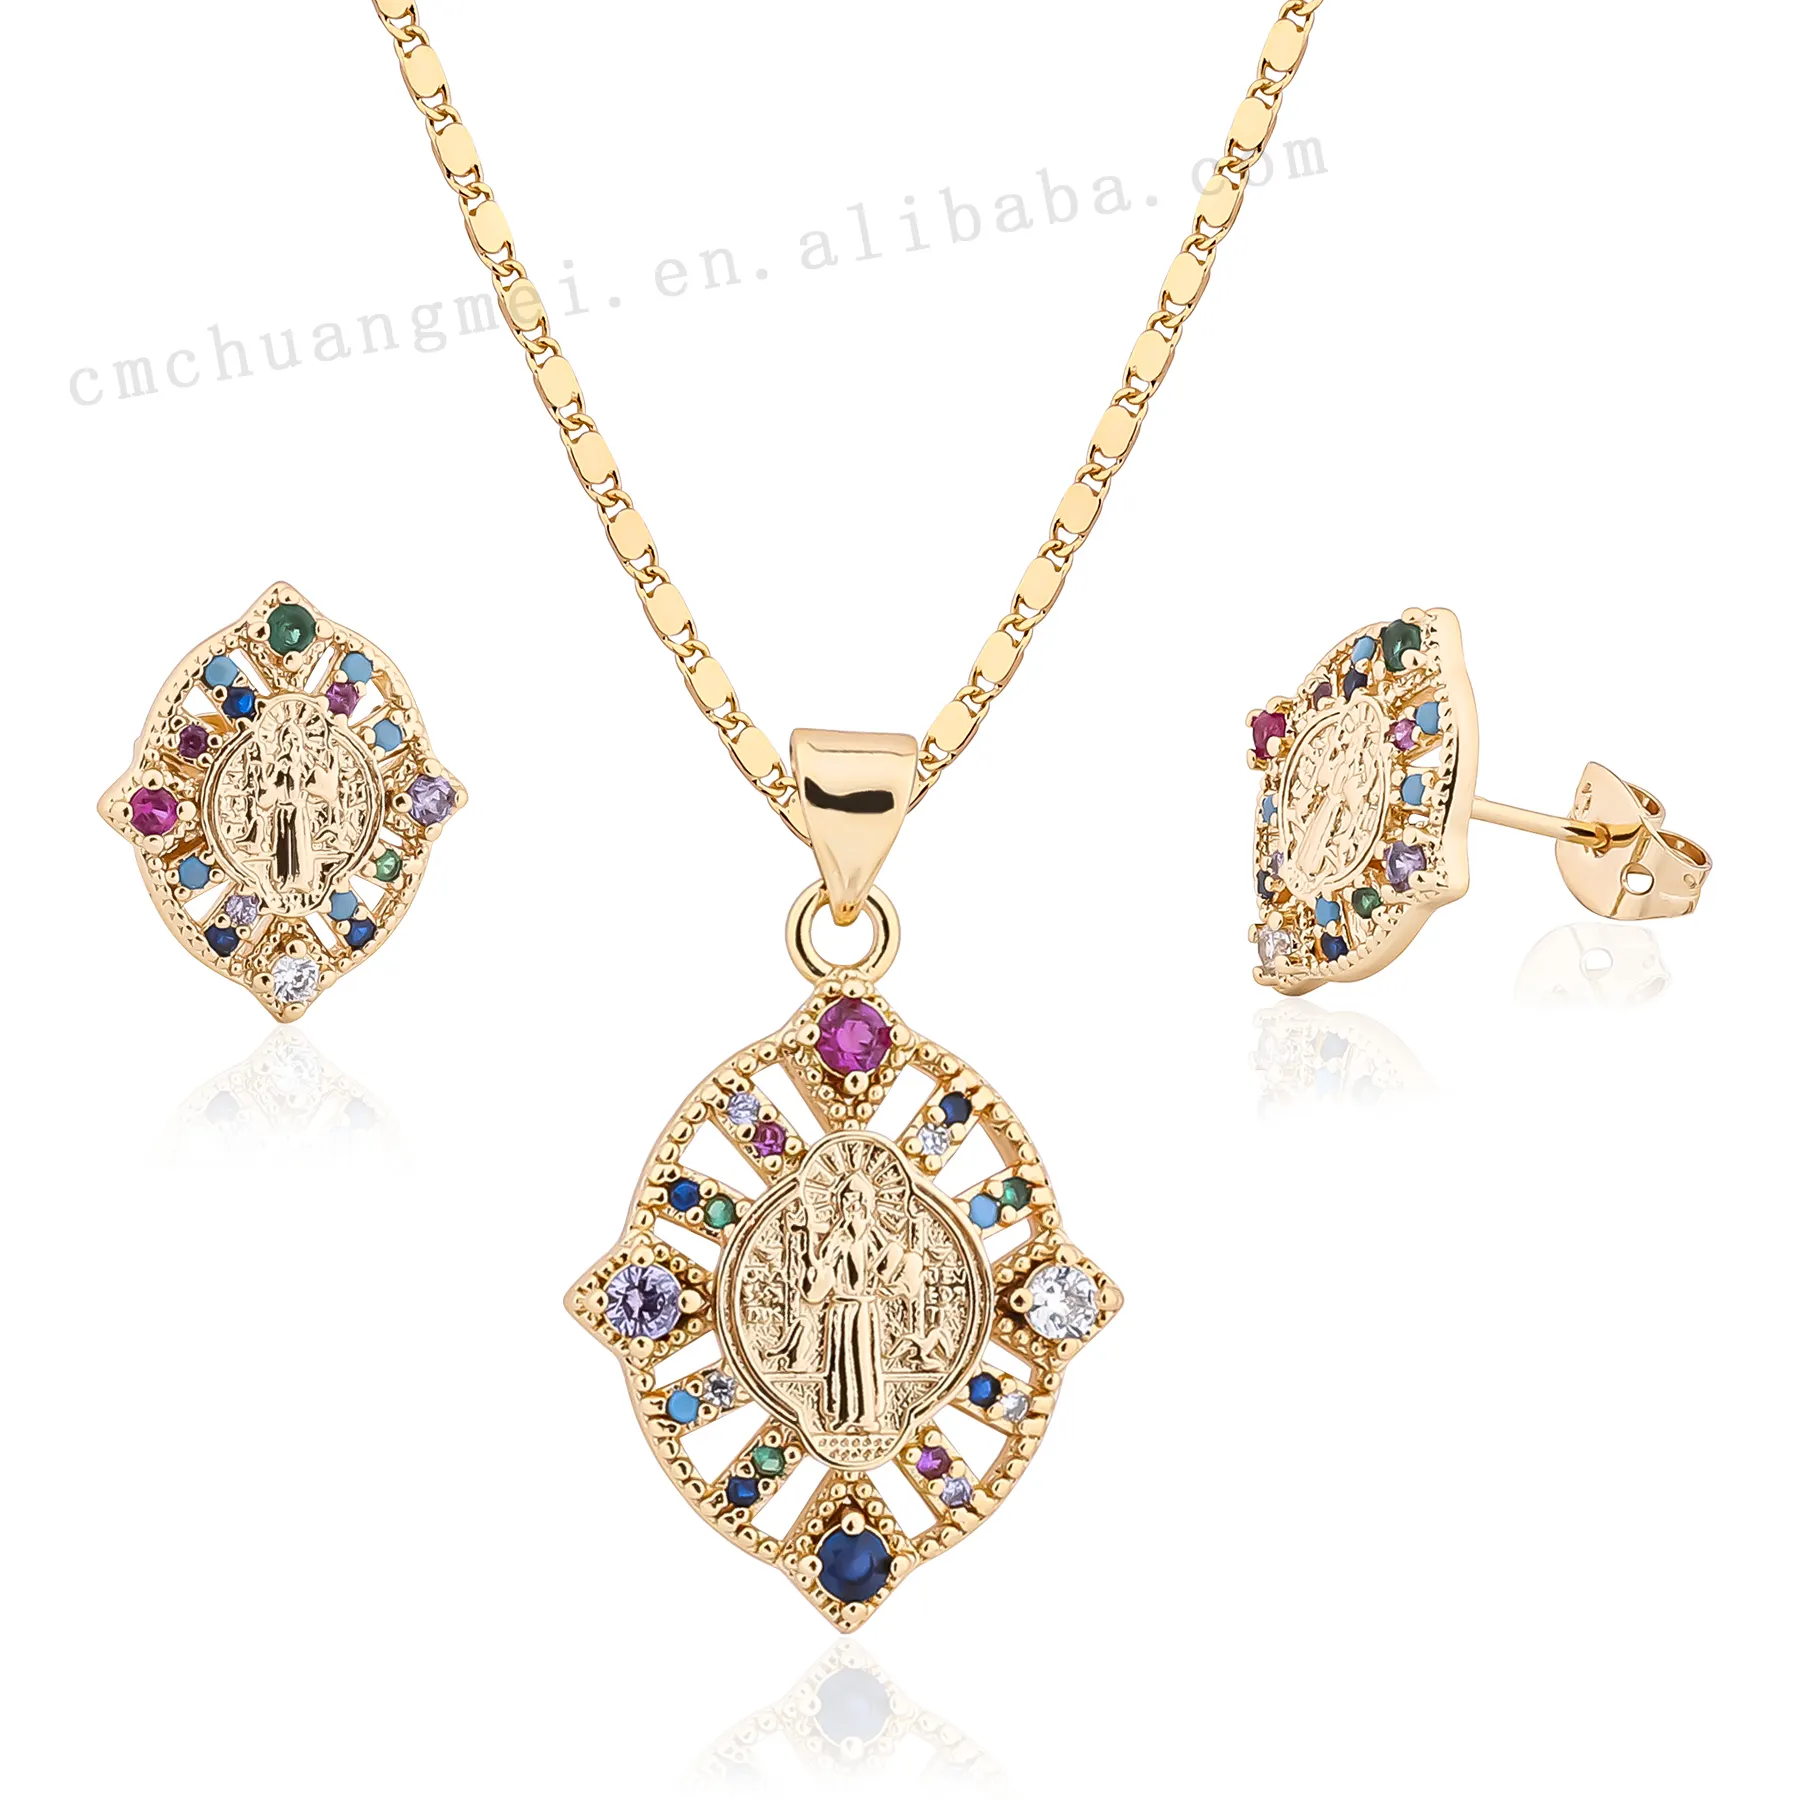 Conjunto de joias para mulheres, conjunto de joias banhadas a ouro 18k, religioso, pingente, joias coloridas, conjuntos de joias para mulheres